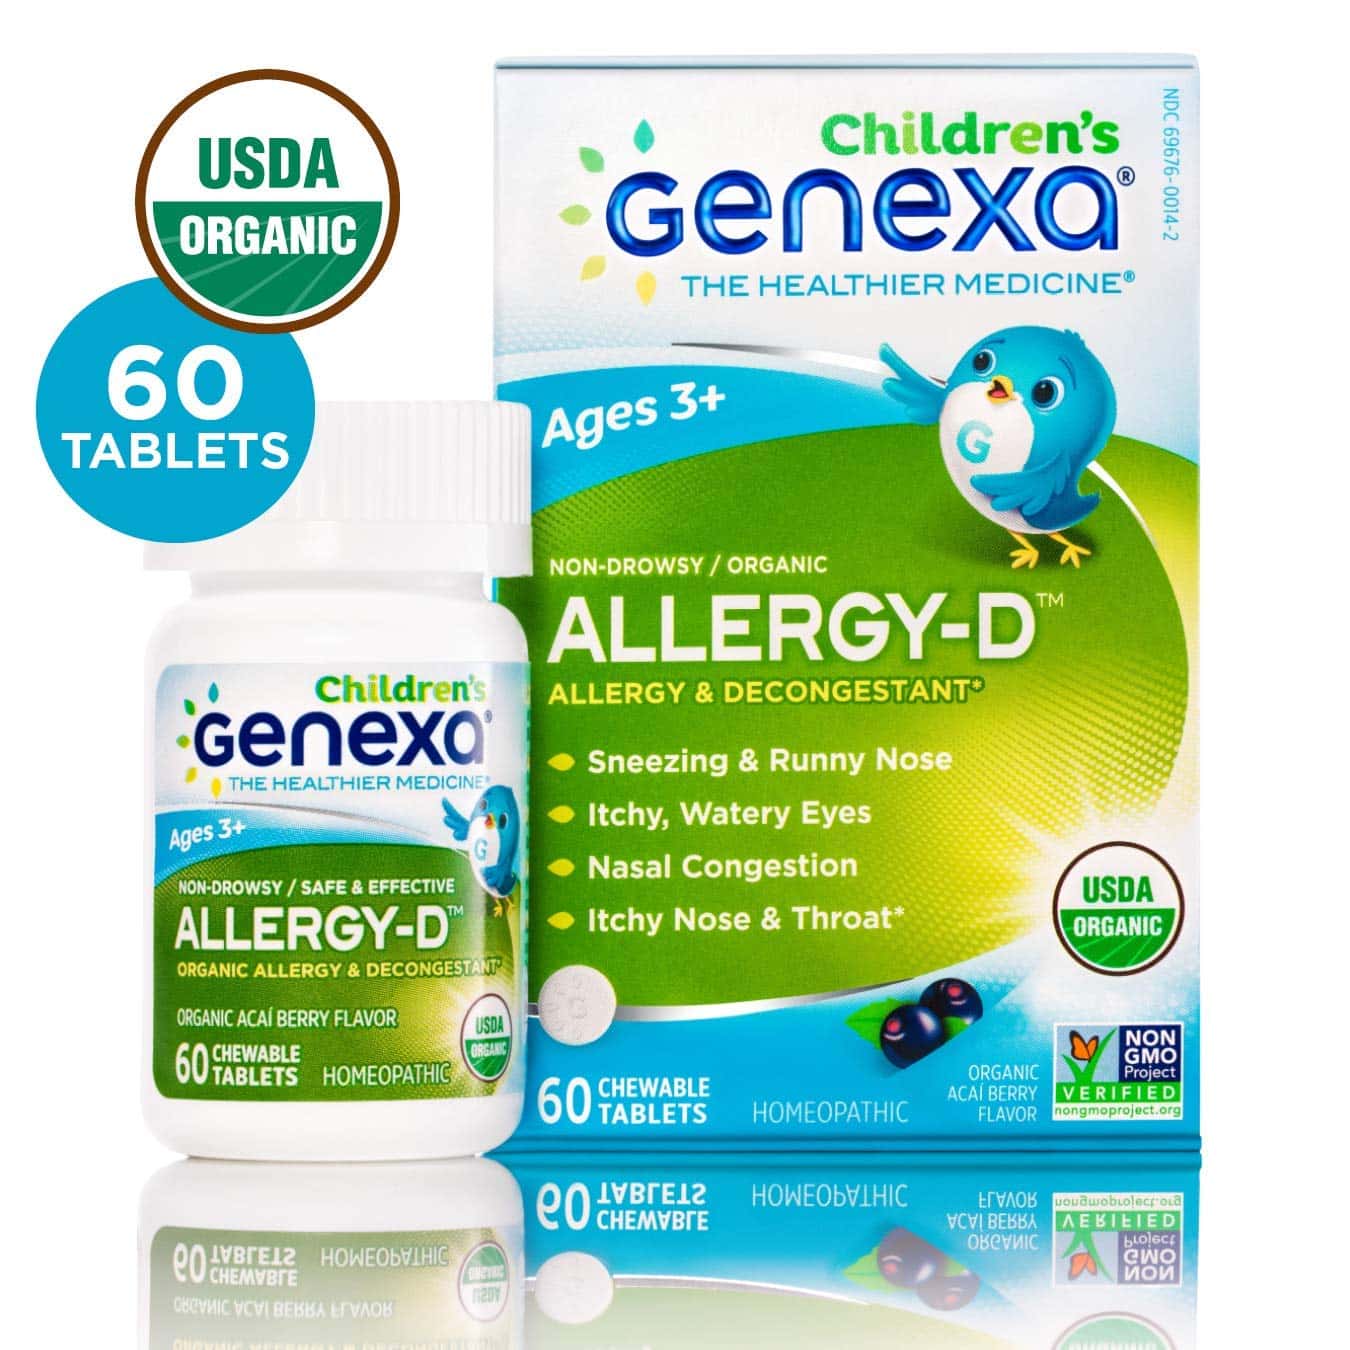 10 Best Allergy Medicine For Kids Reviews Of 2021